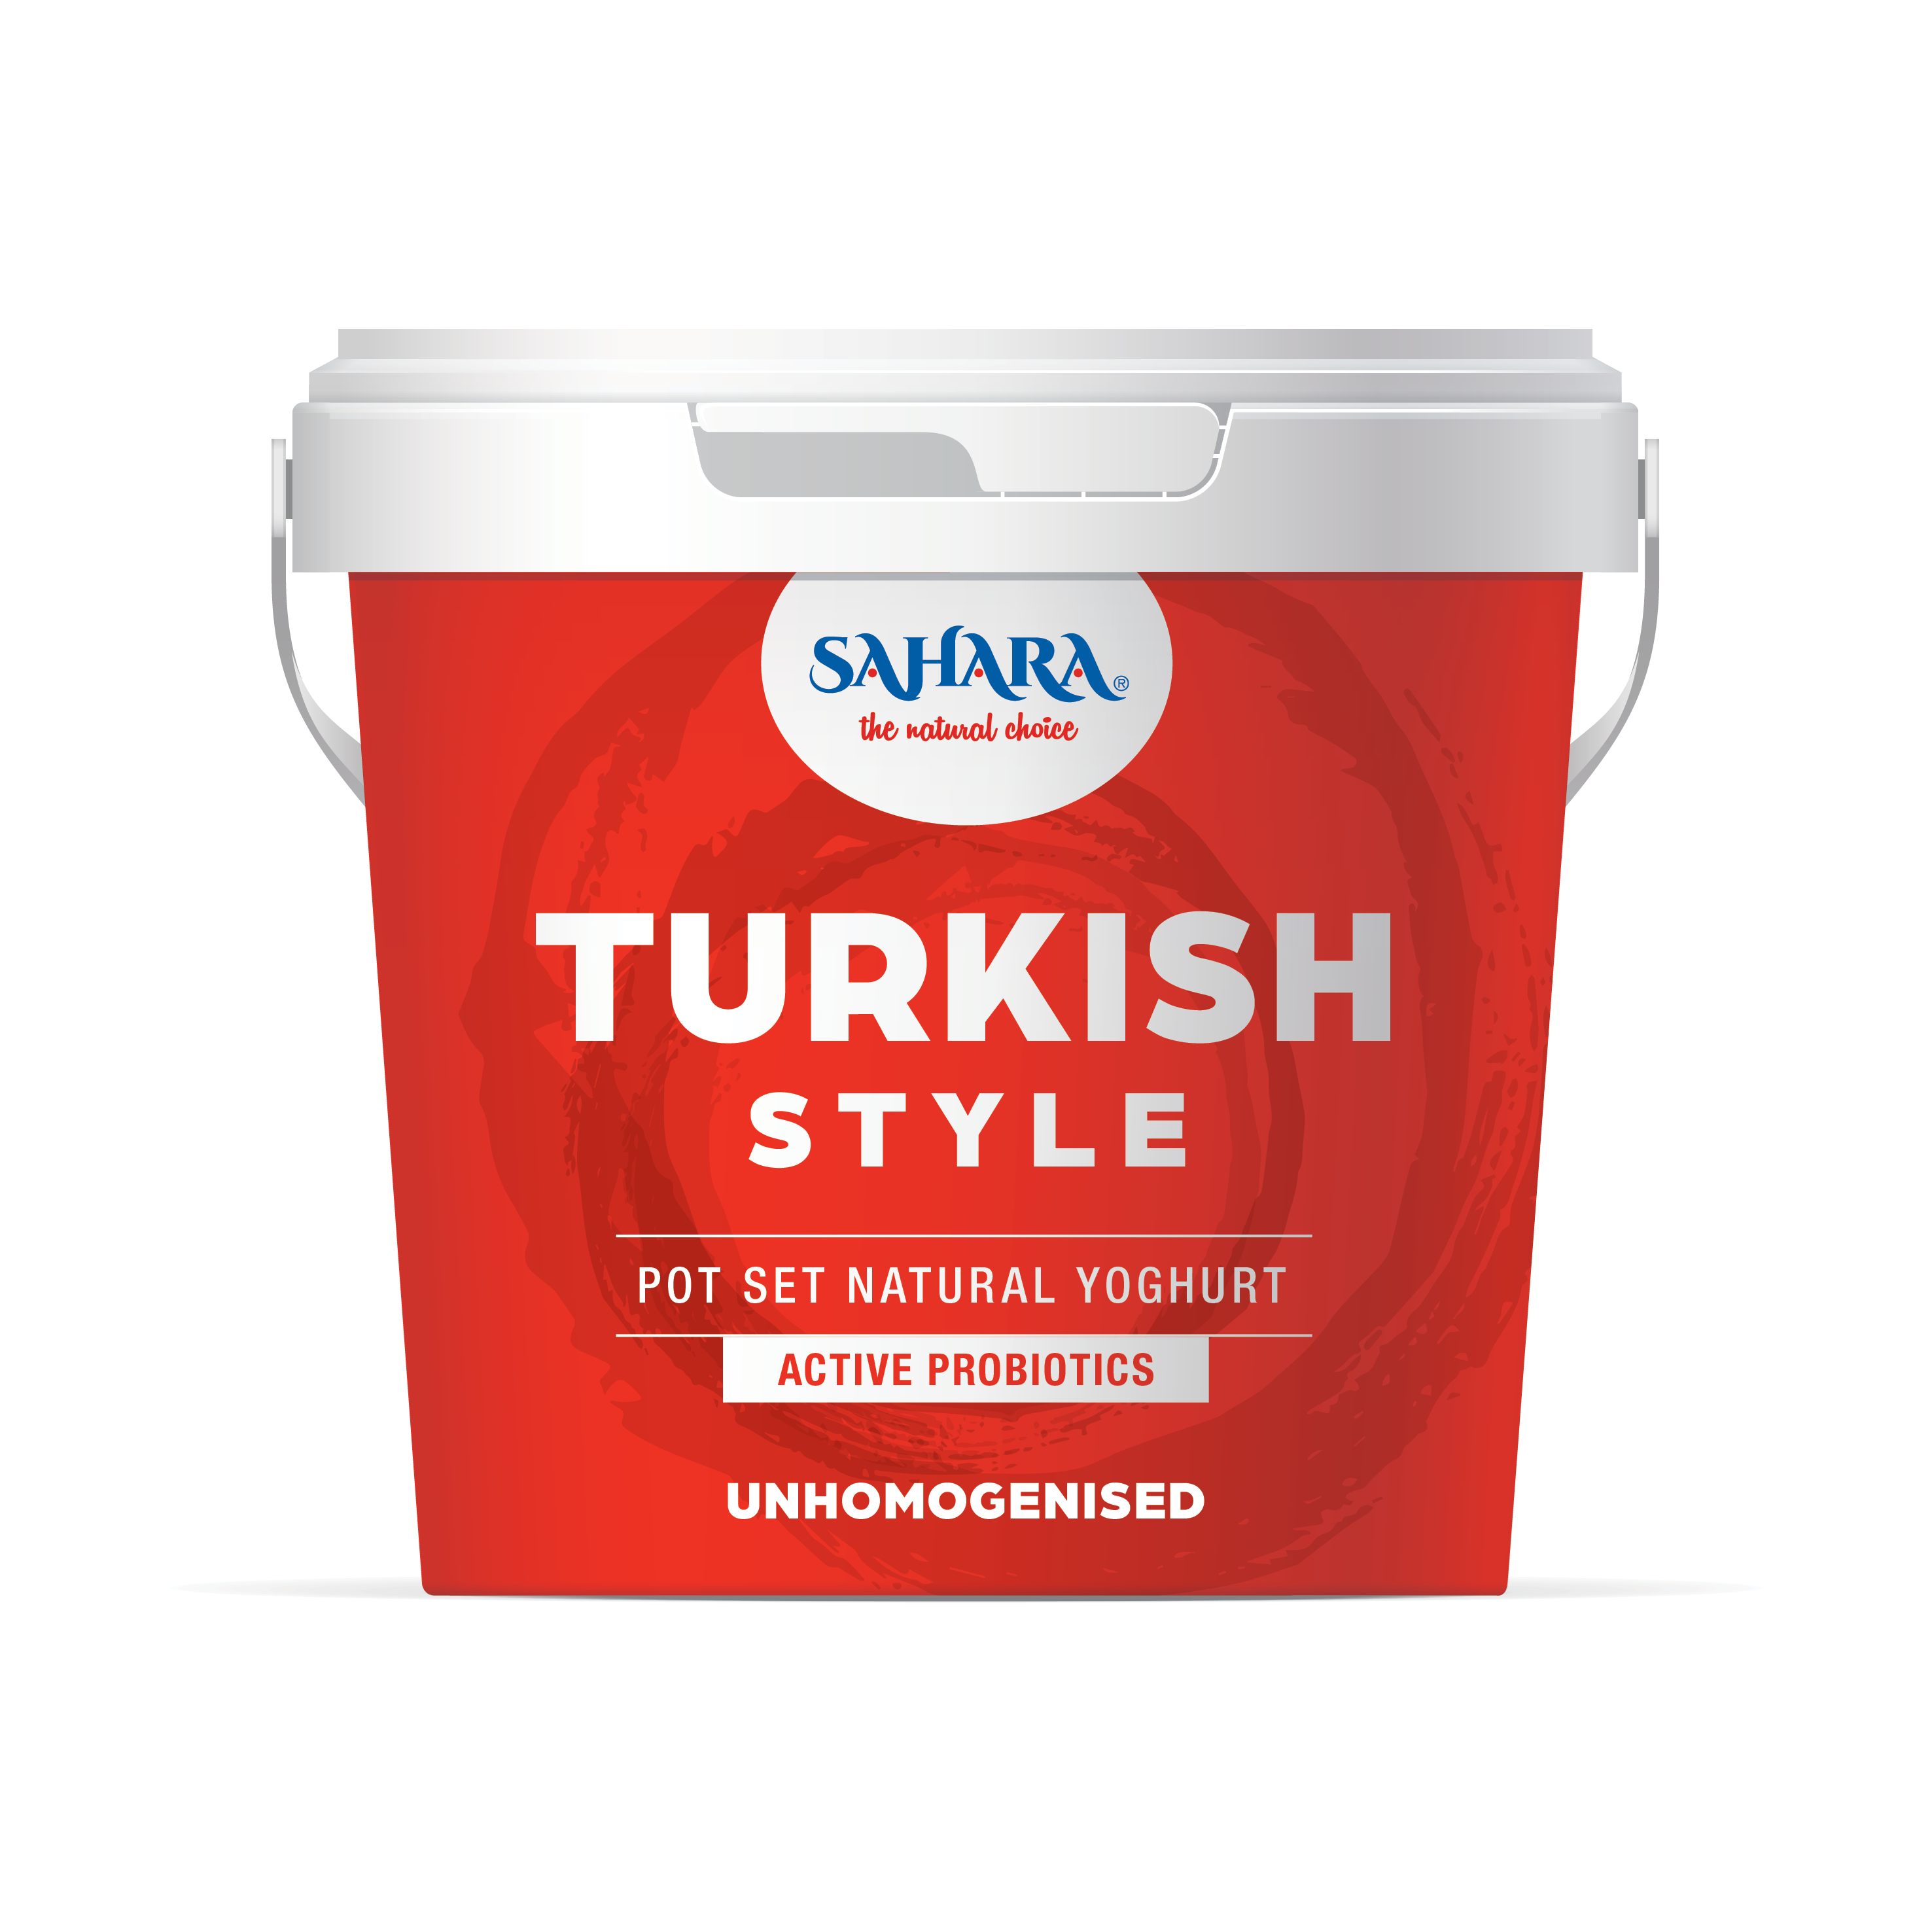 Sahara Turkish Style Yoghurt